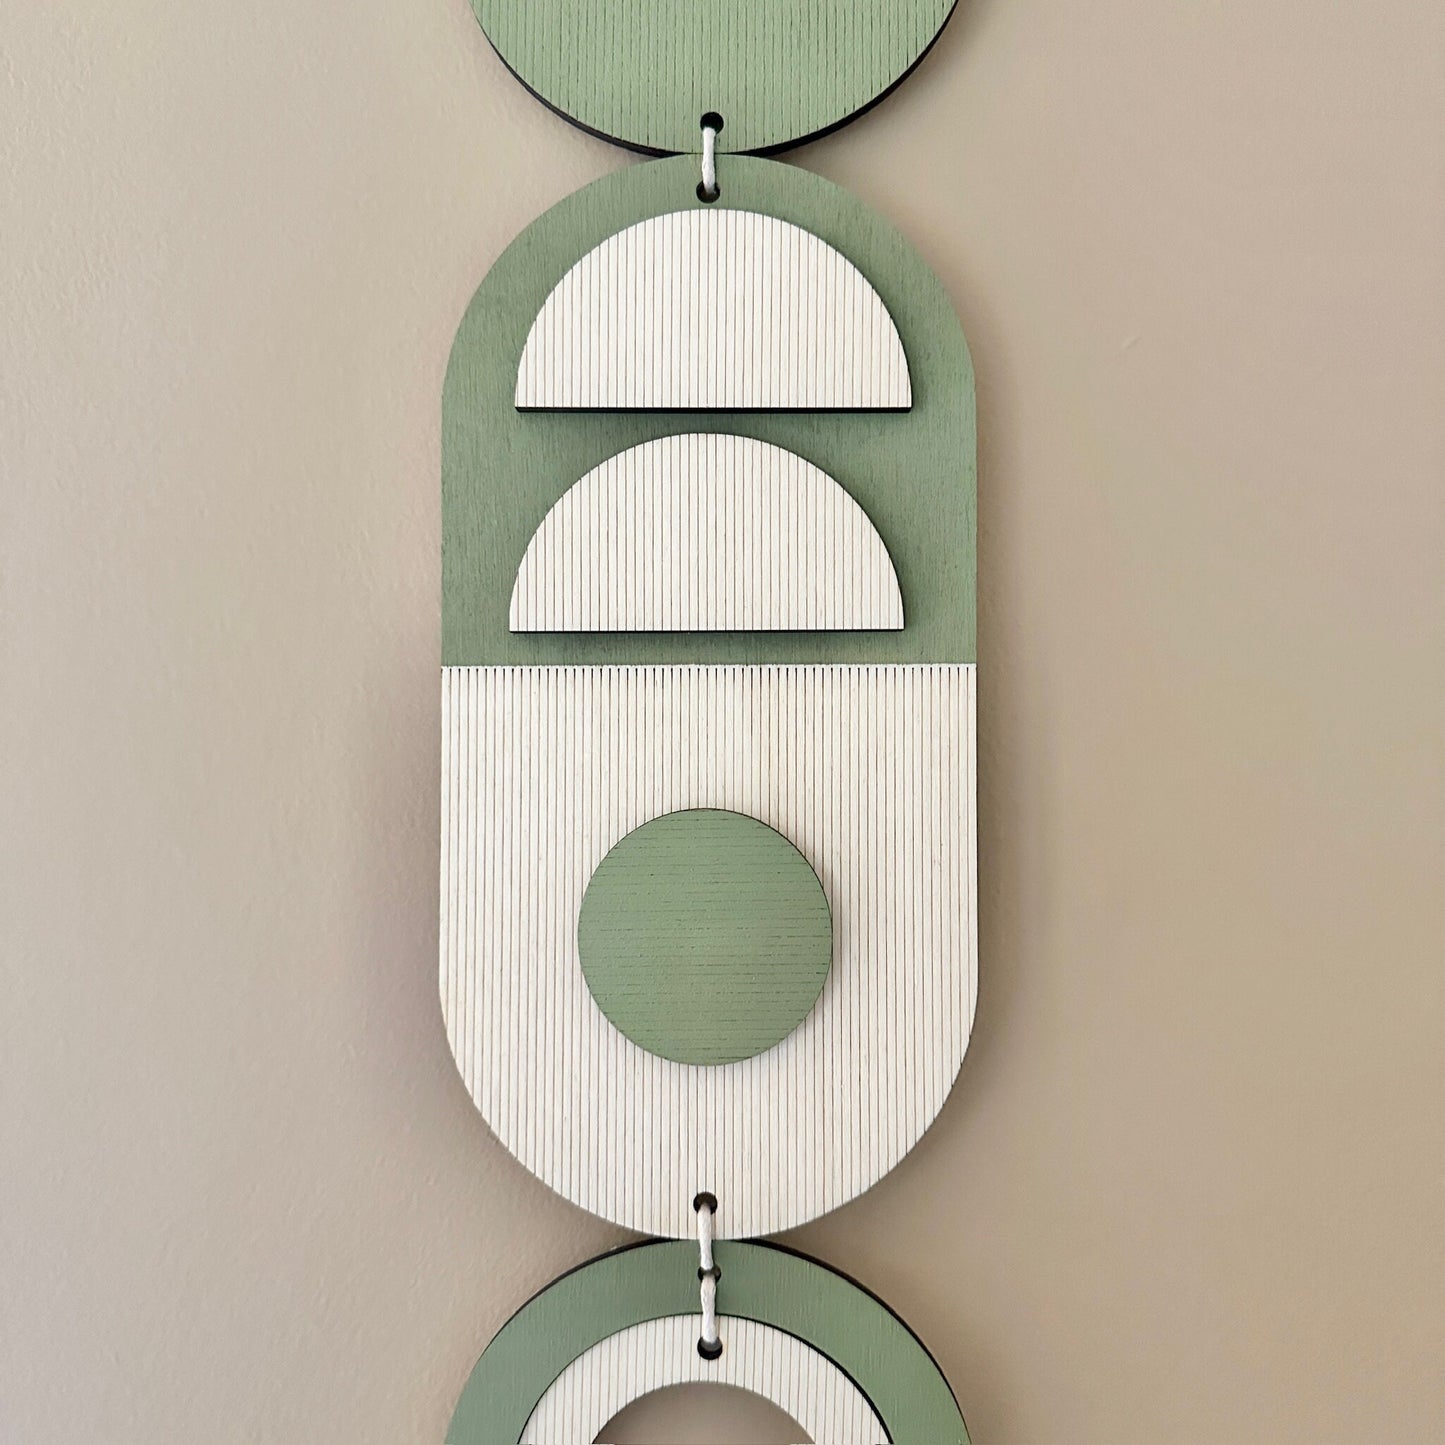 Green Wall Hanging Gift - Geometric Wall Art - New Home Gift - Housewarming Present - Mid-Century Home Decor - Art Gifting